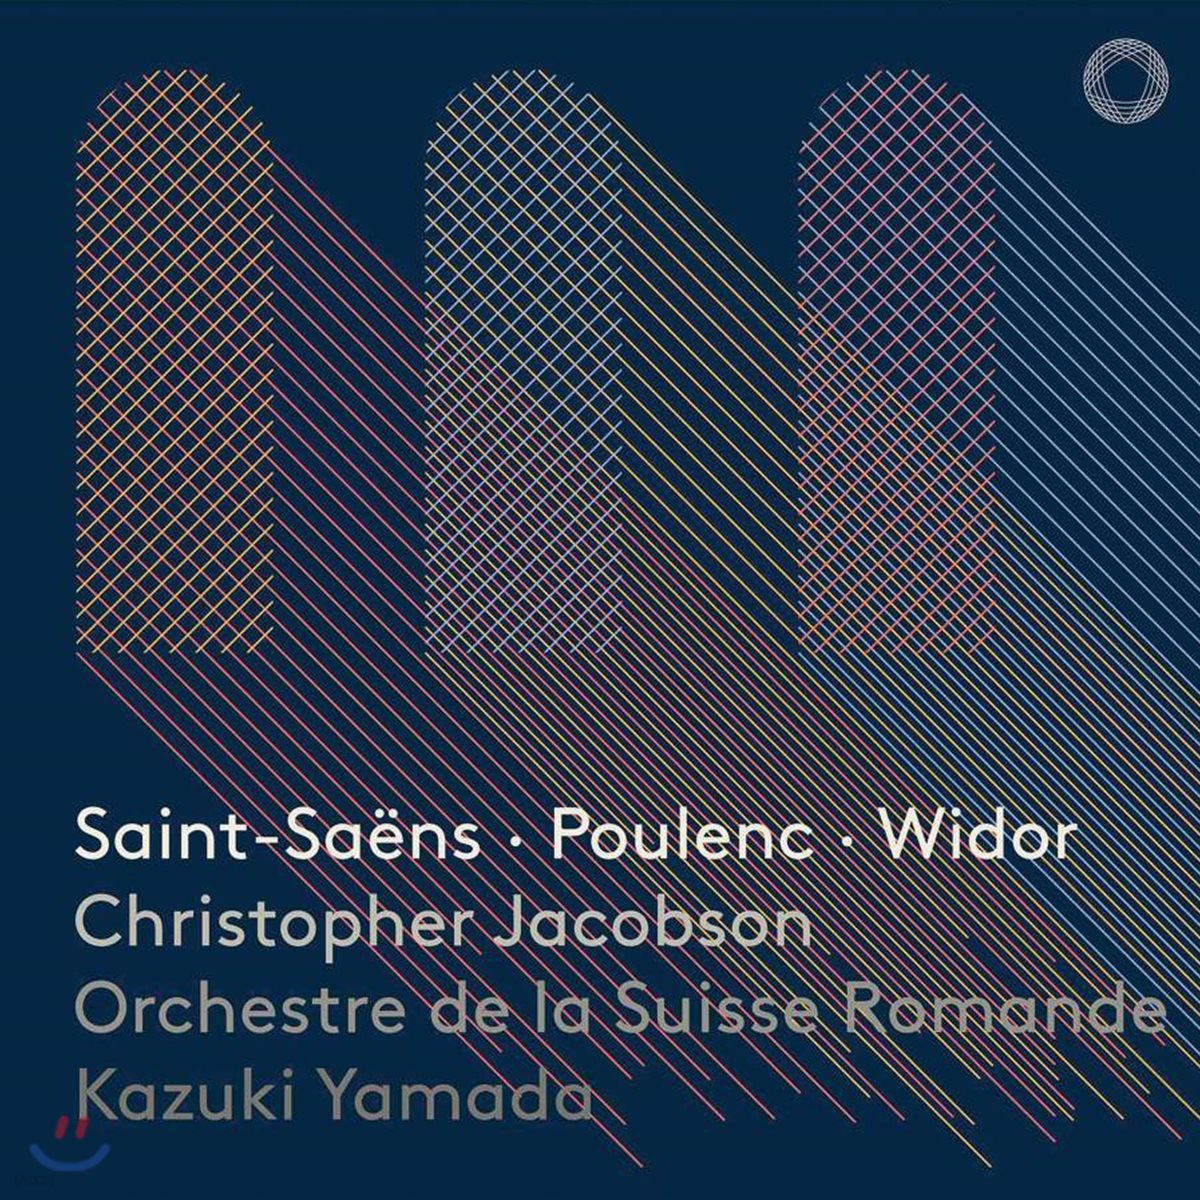 Christopher Jacobson 생상스 / 풀랑크 / 비도르: 오르간 작품 모음집 (Saint-Saens /  Poulenc / Widor: Organ Works)